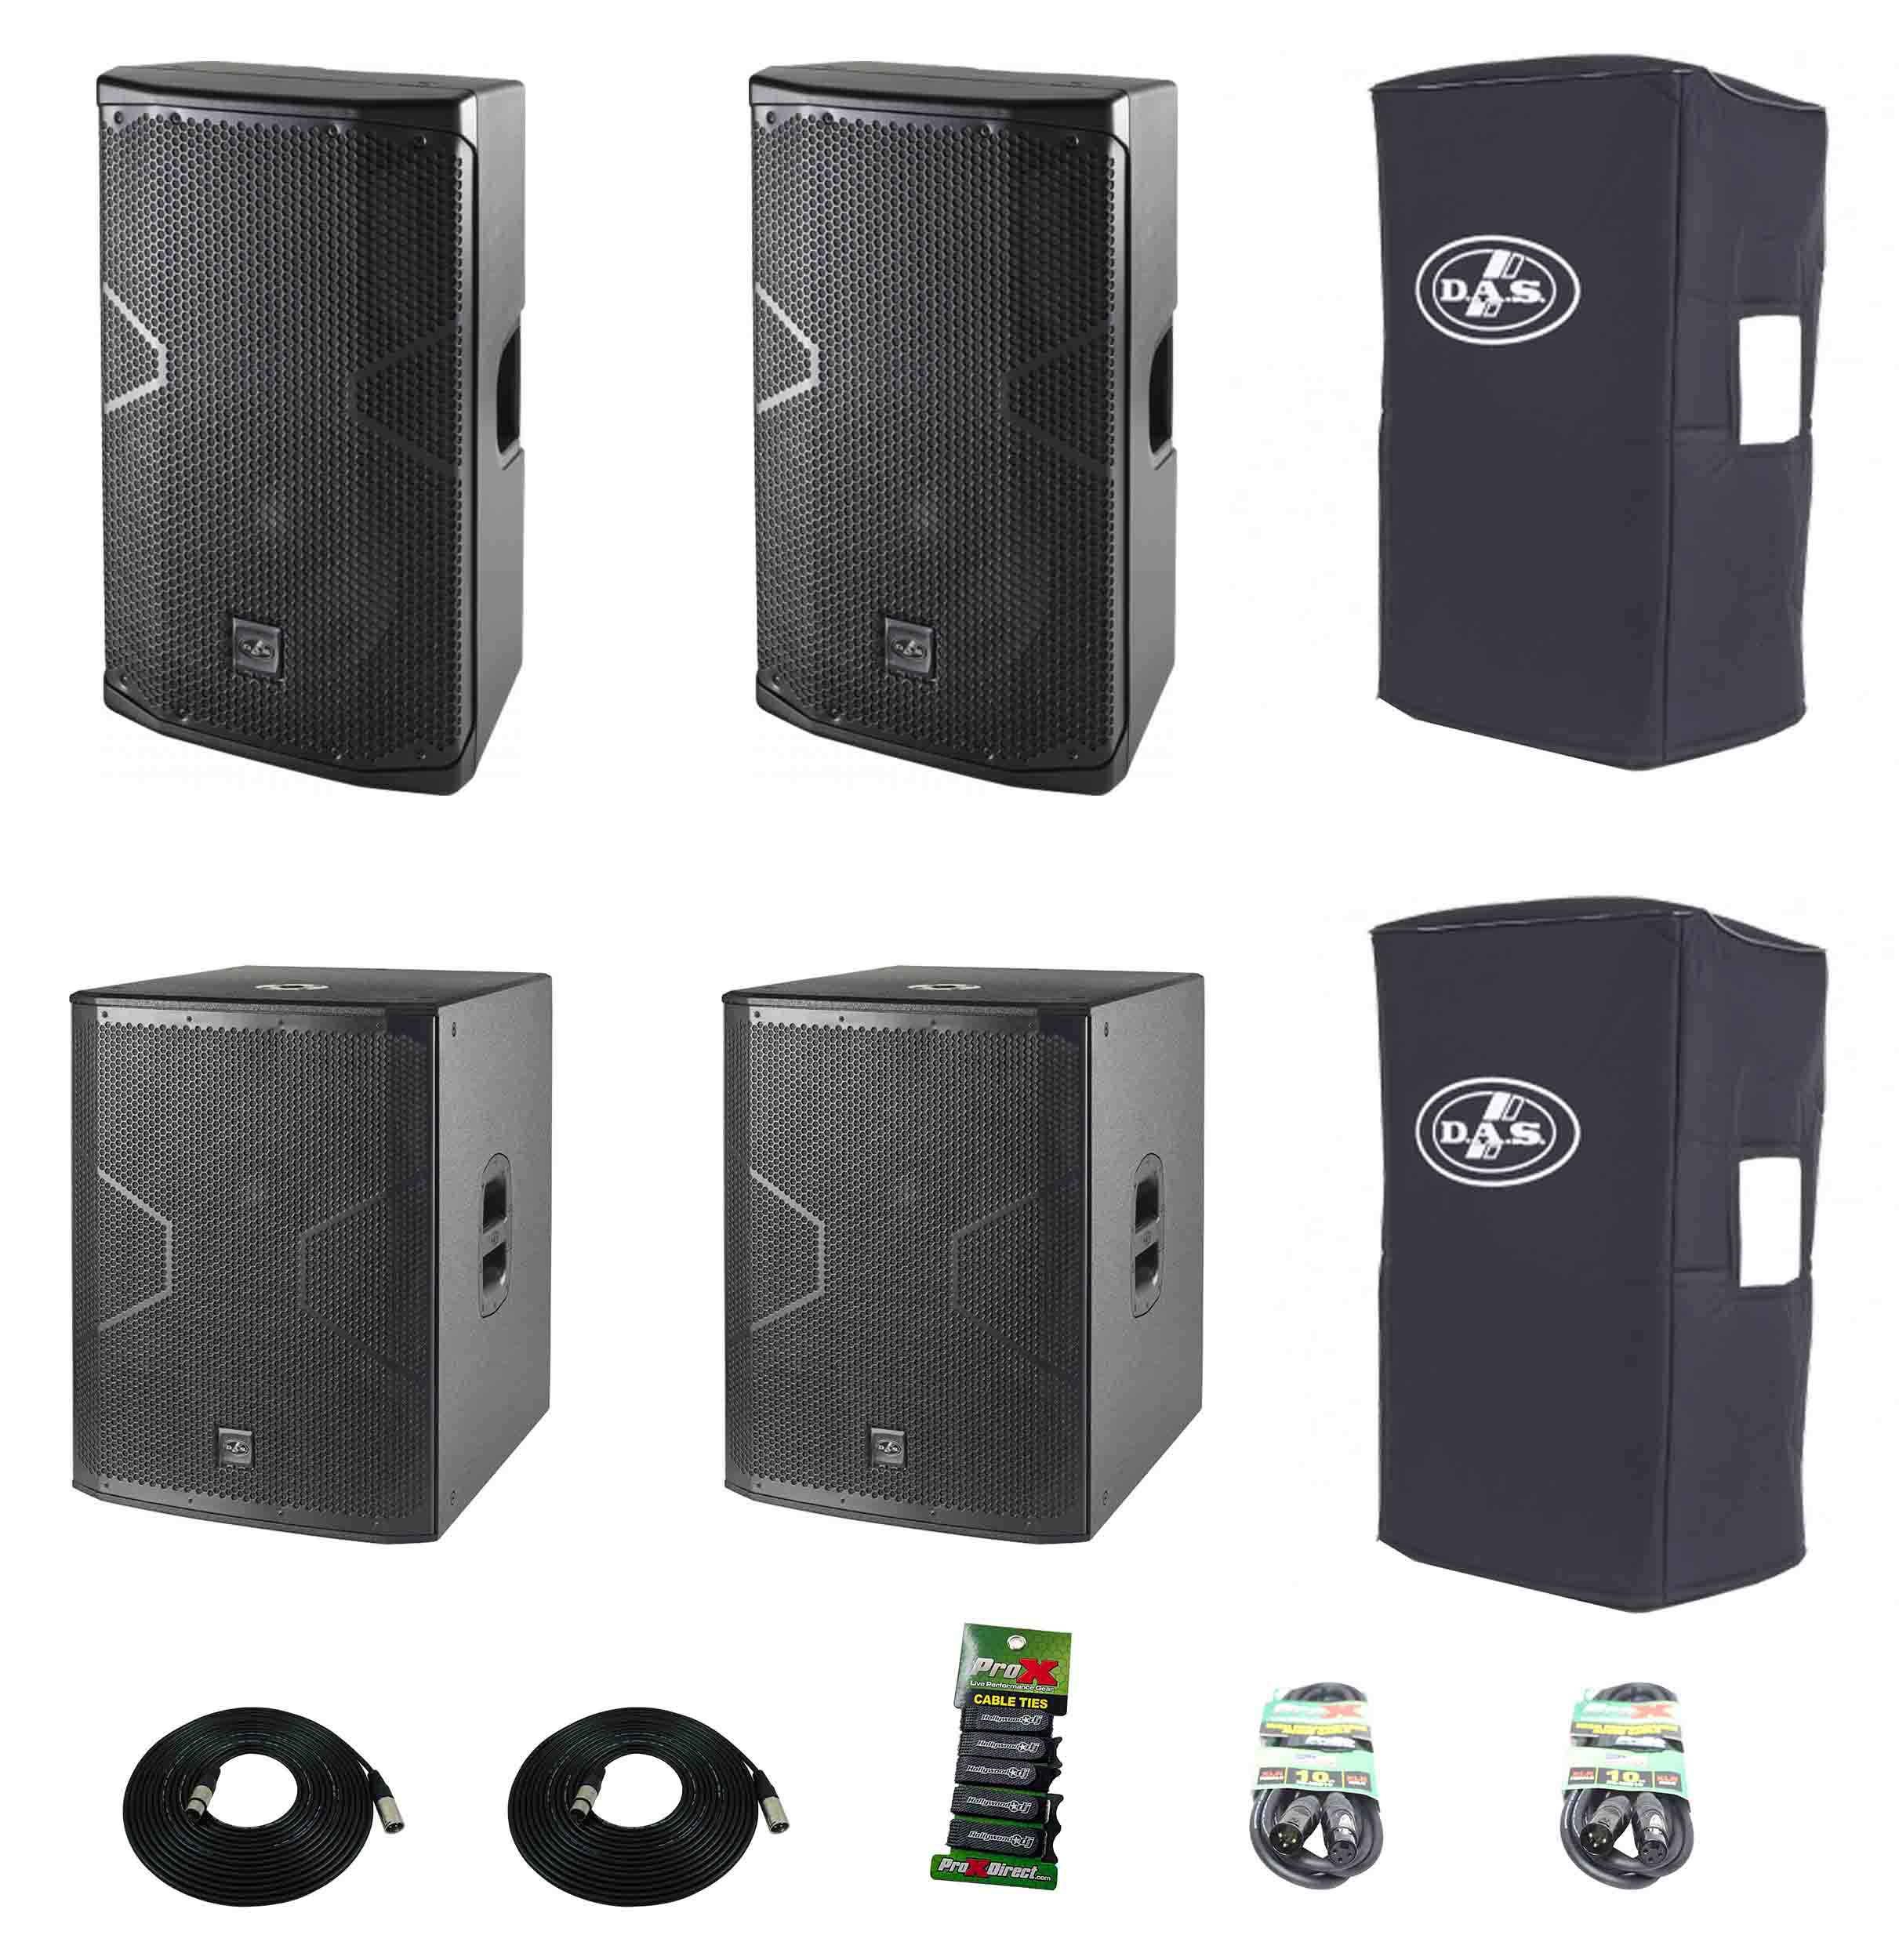 DAS Audio 712ACVRALTEA12718A, 12-Inch Powered Speaker DJ Package with Subs by DAS Audio